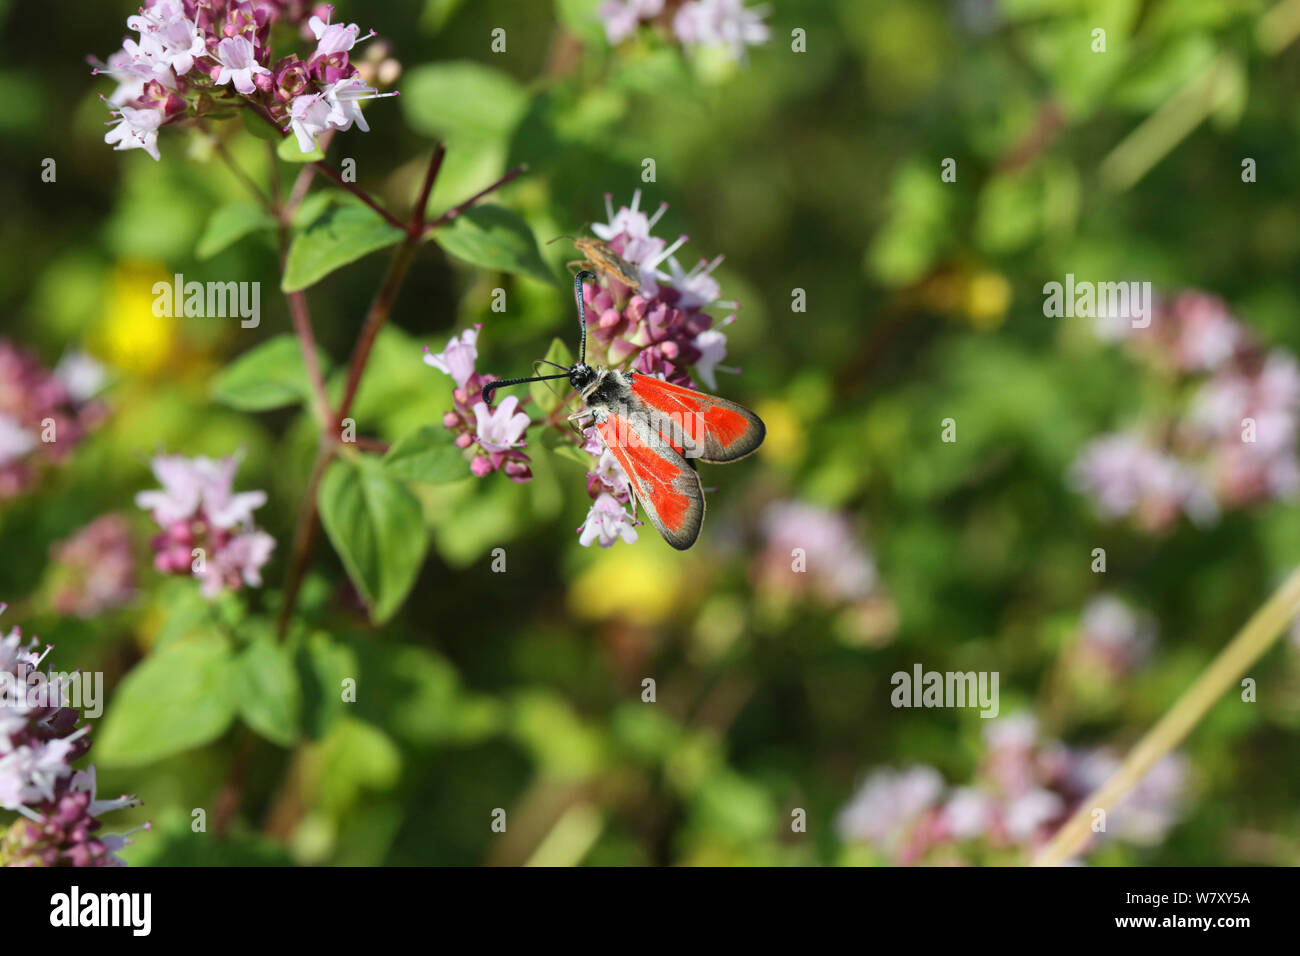 Transparent burnet moth (Zygaena purpuralis) on Marjoram (Origanum vulgare). Bulgaria, July. Stock Photo